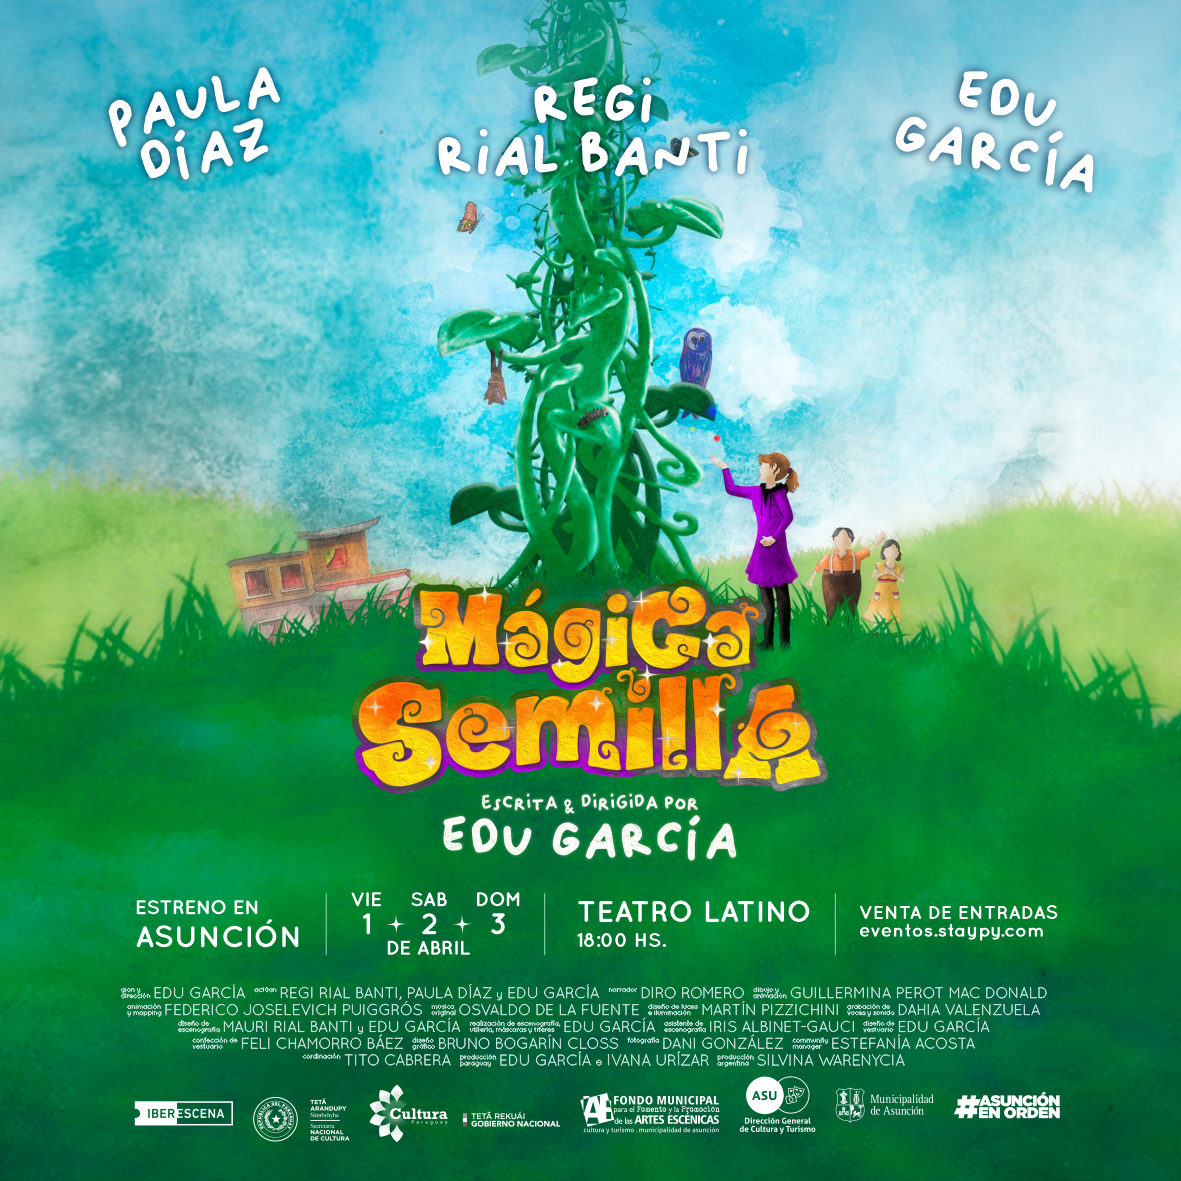 En abril se estrena la obra teatral “Mágica semilla”, adjudicada por el Programa Iberescena imagen